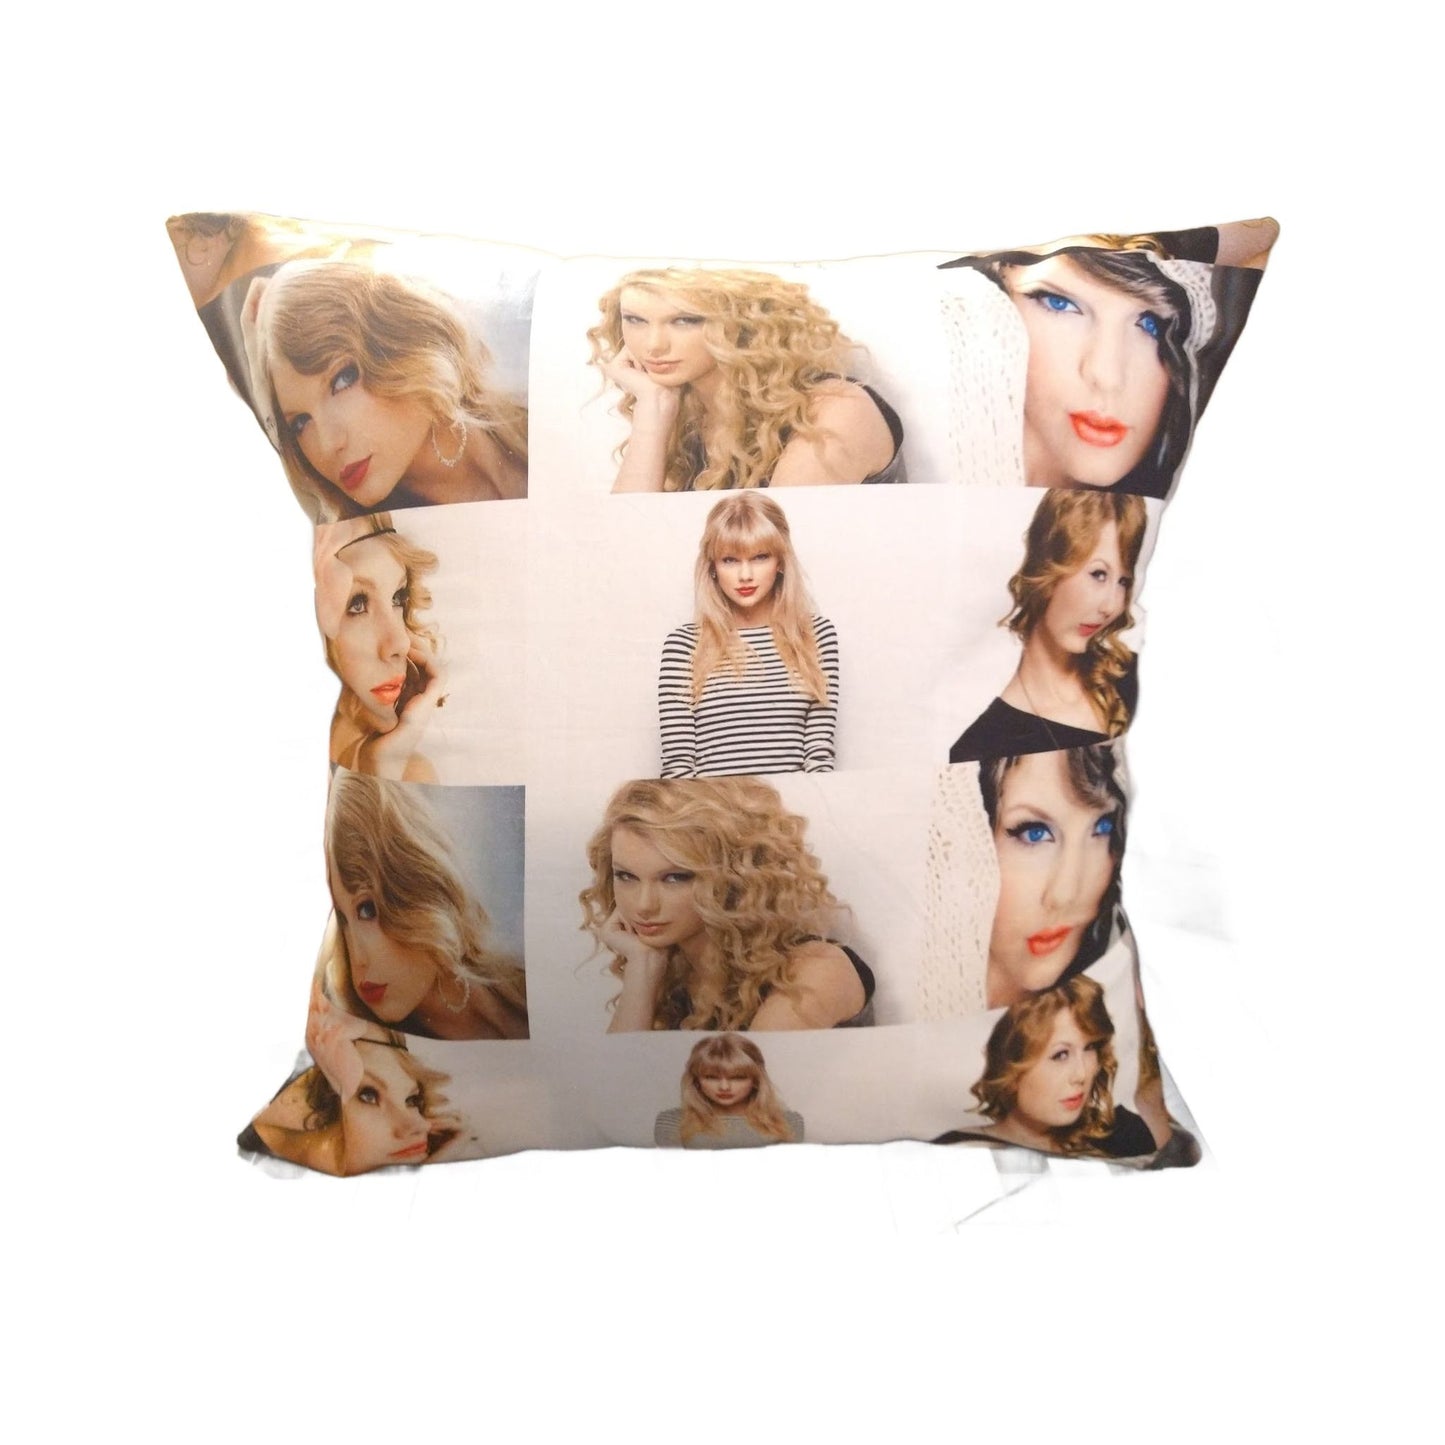 Swiftie Decorative Throw Pillows (Set of 2)